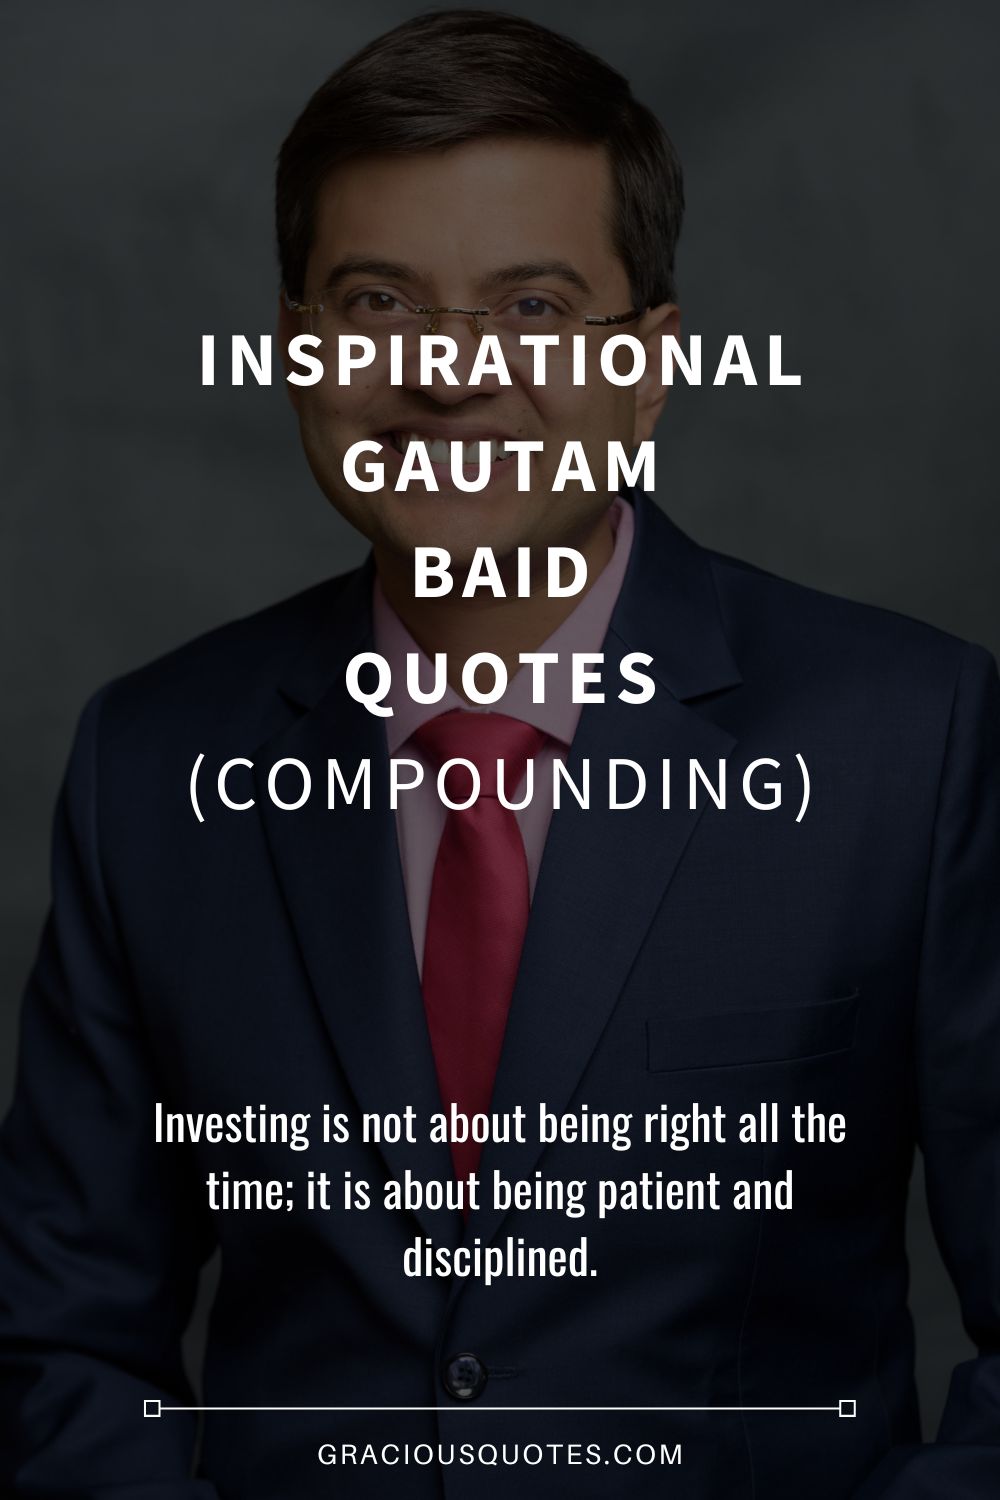 Inspirational Gautam Baid Quotes (COMPOUNDING) - Gracious Quotes